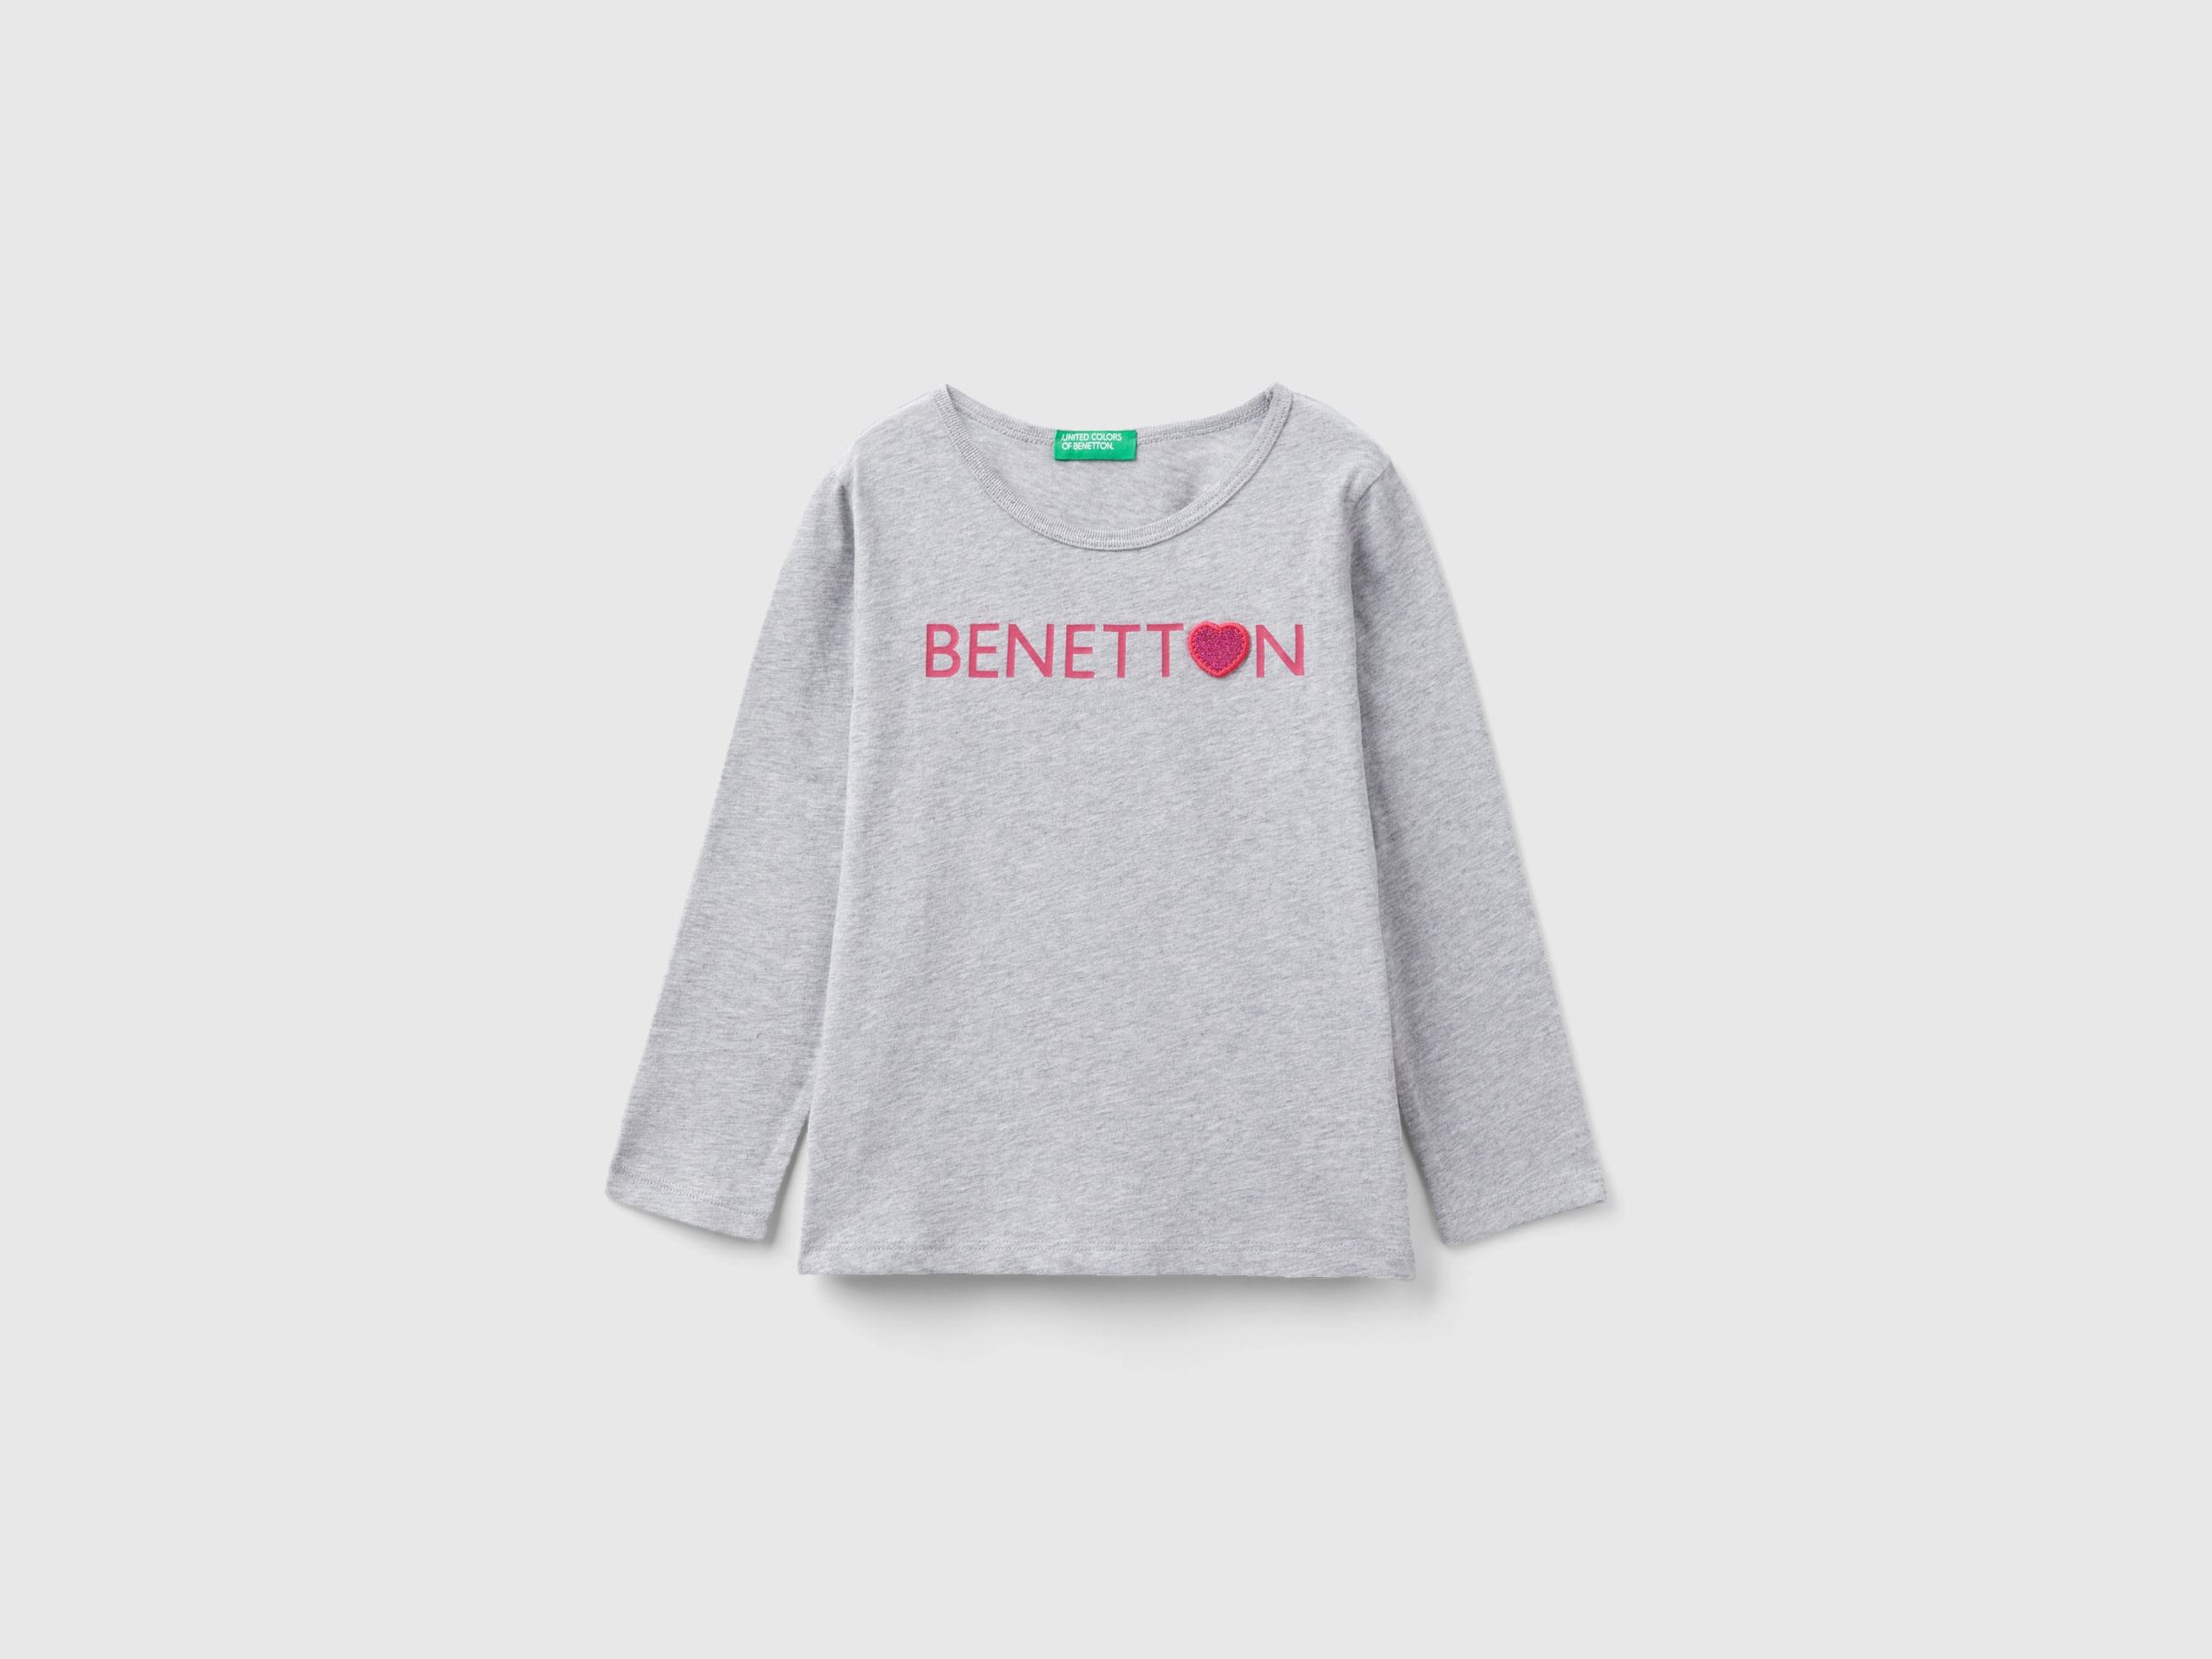 Benetton, Organic Cotton T-shirt With Glittery Print, size 4-5, Light Gray, Kids